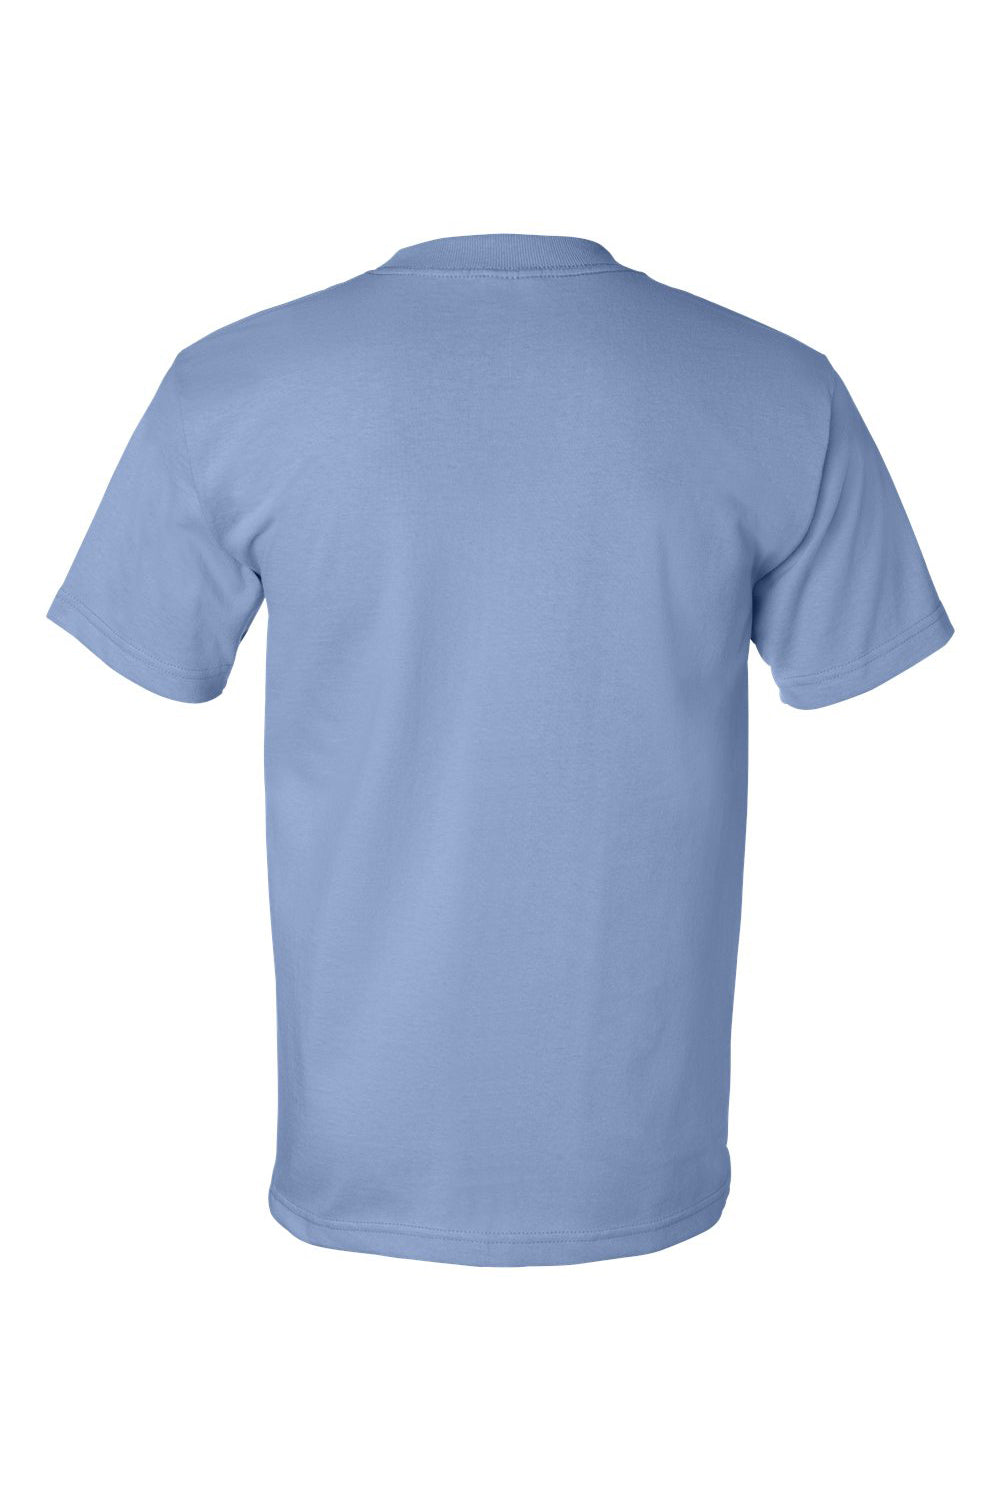 Bayside BA5100 Mens USA Made Short Sleeve Crewneck T-Shirt Carolina Blue Flat Back